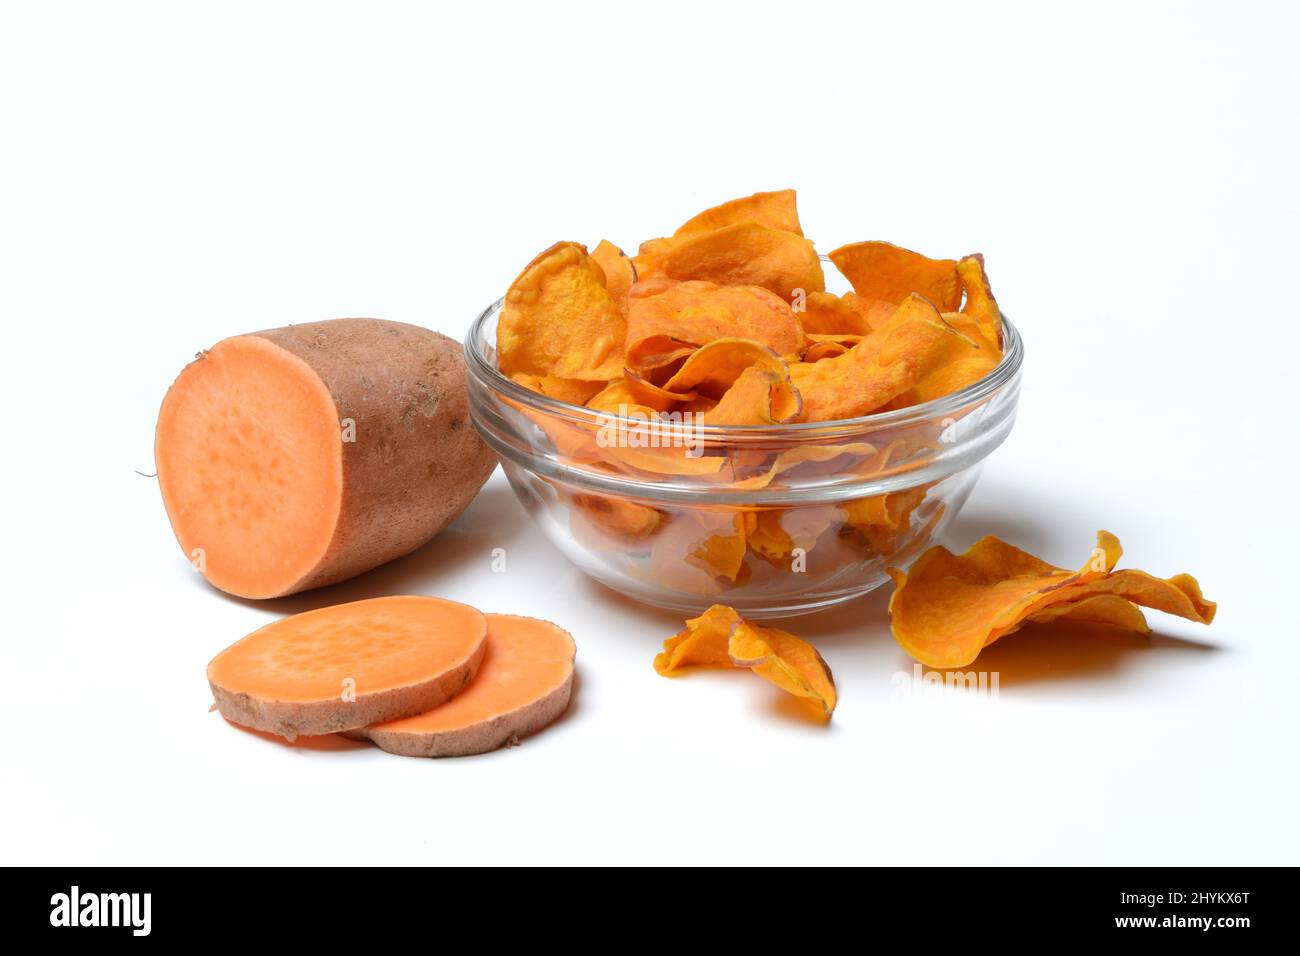 Sweet potato and sweet crisps in skin Stock Photo